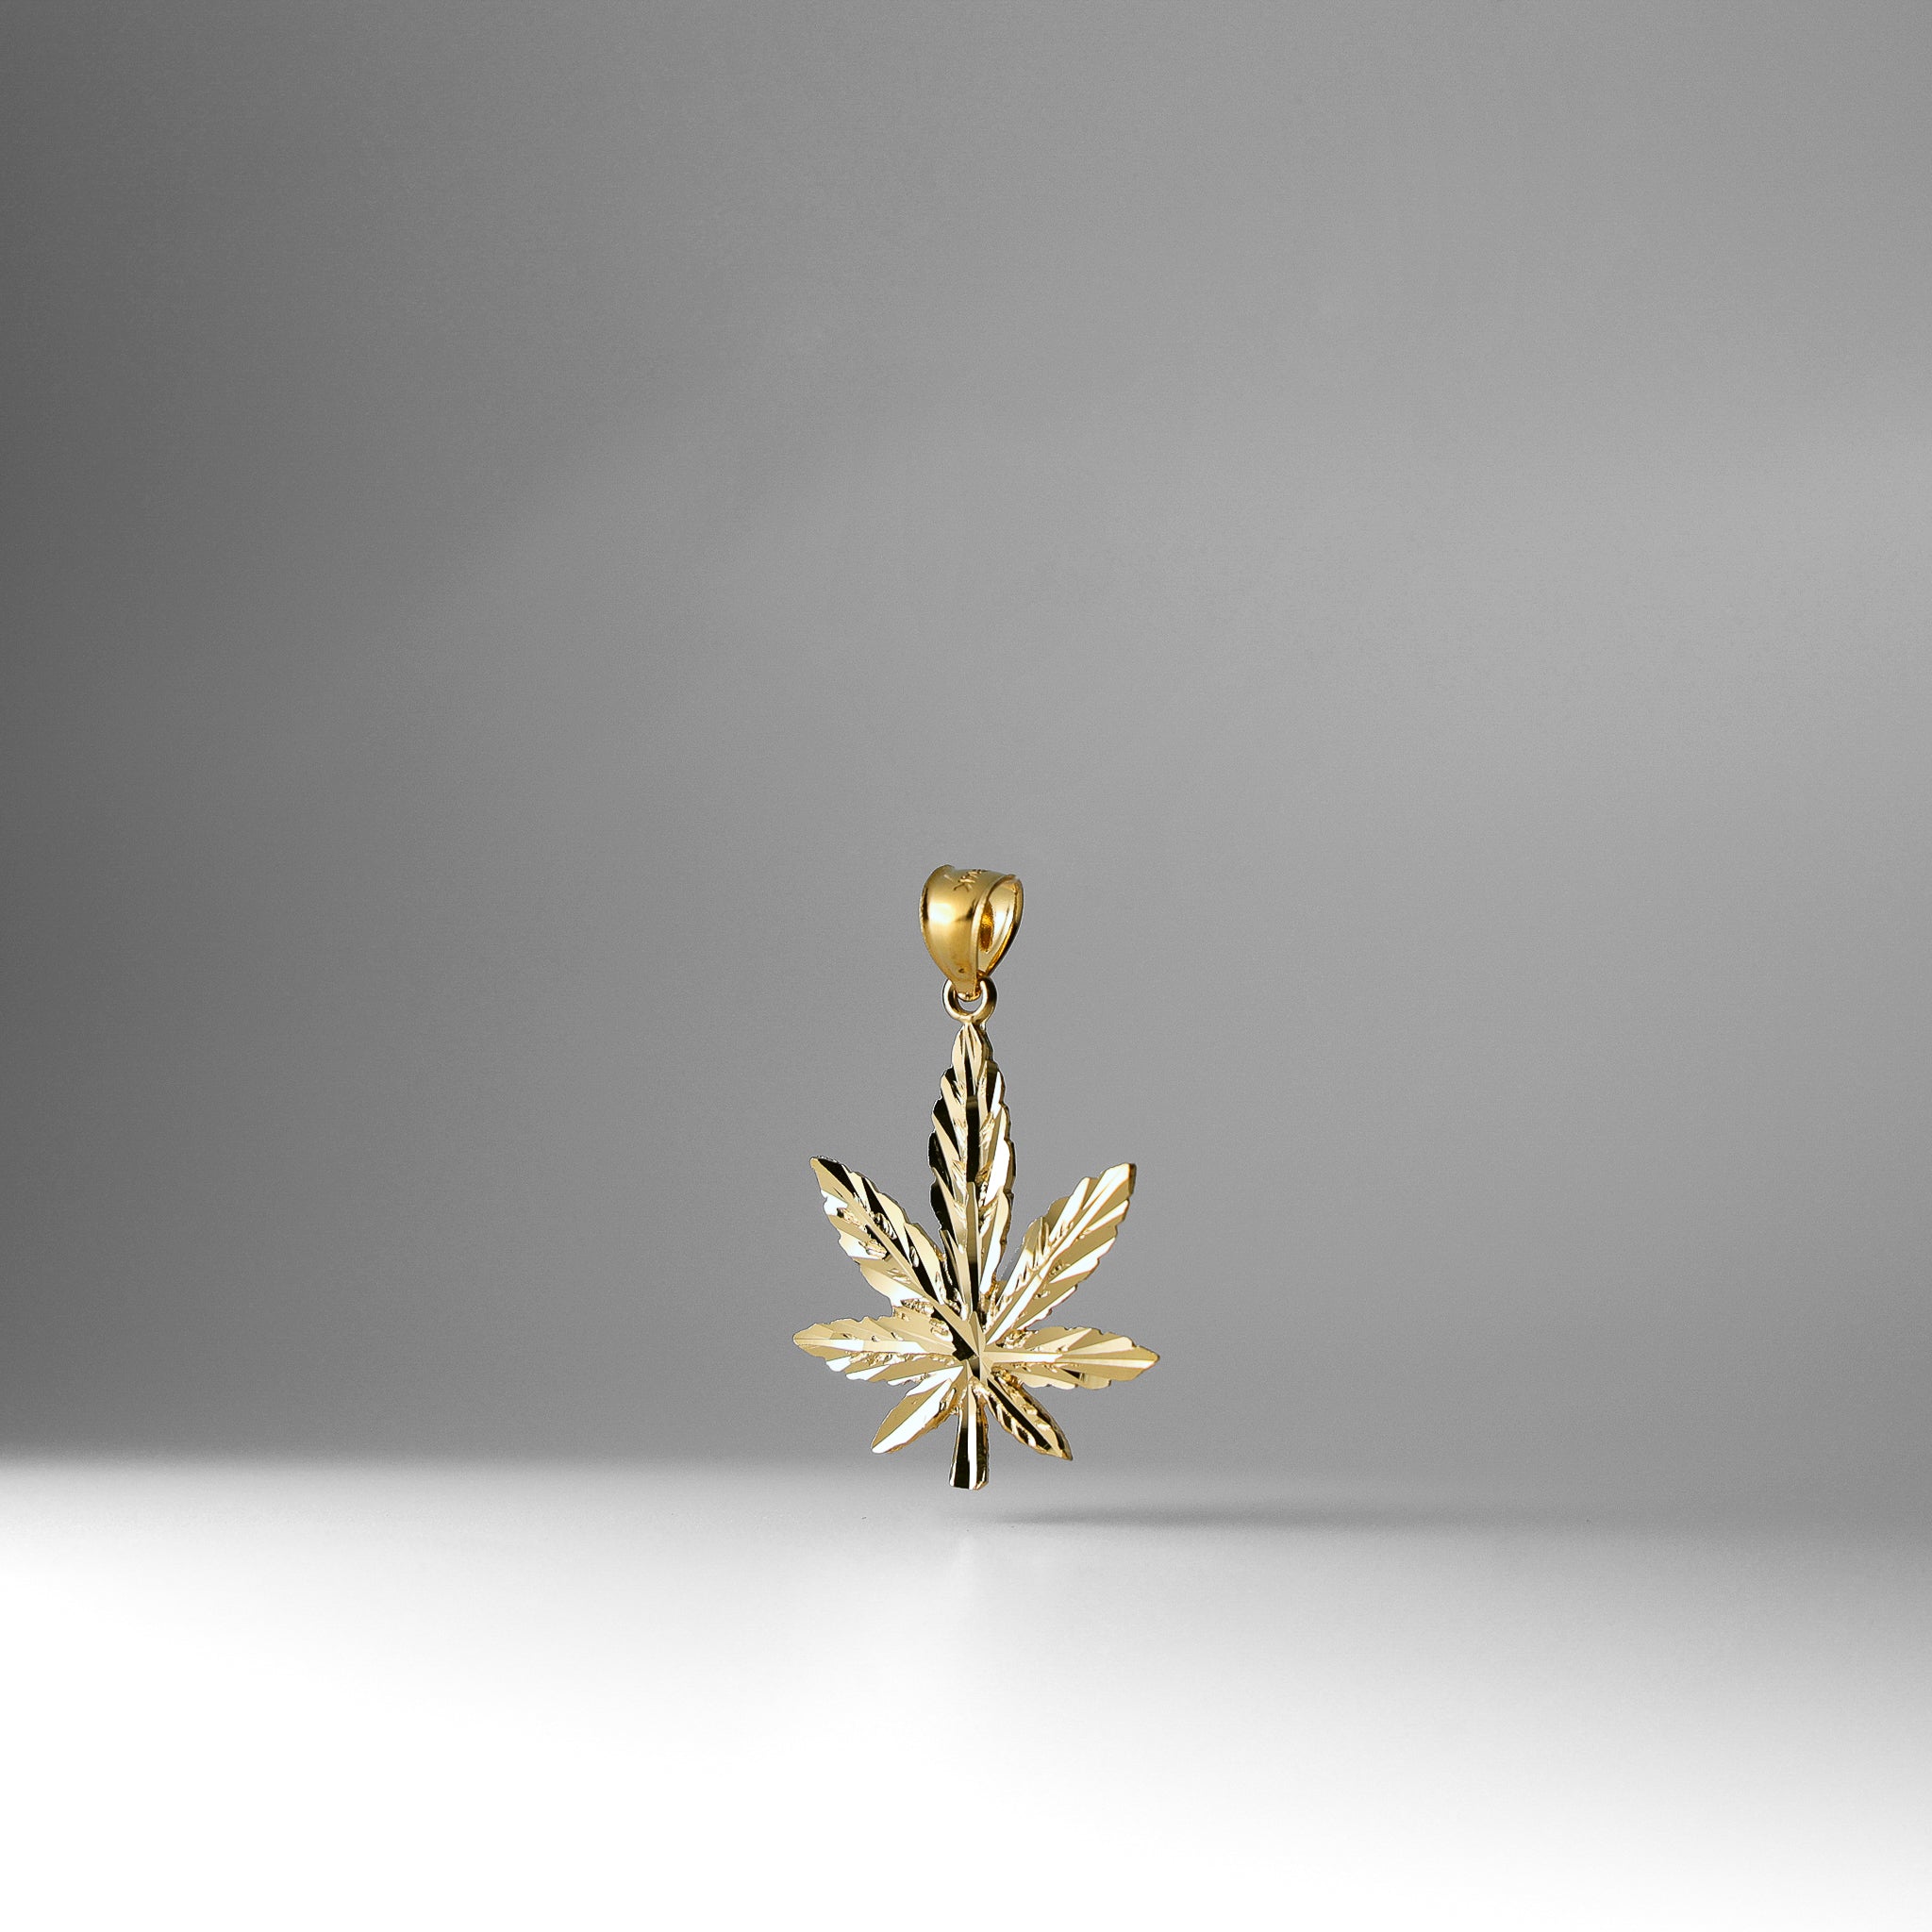 Gold Marijuana Leaf Pendant Model-1569